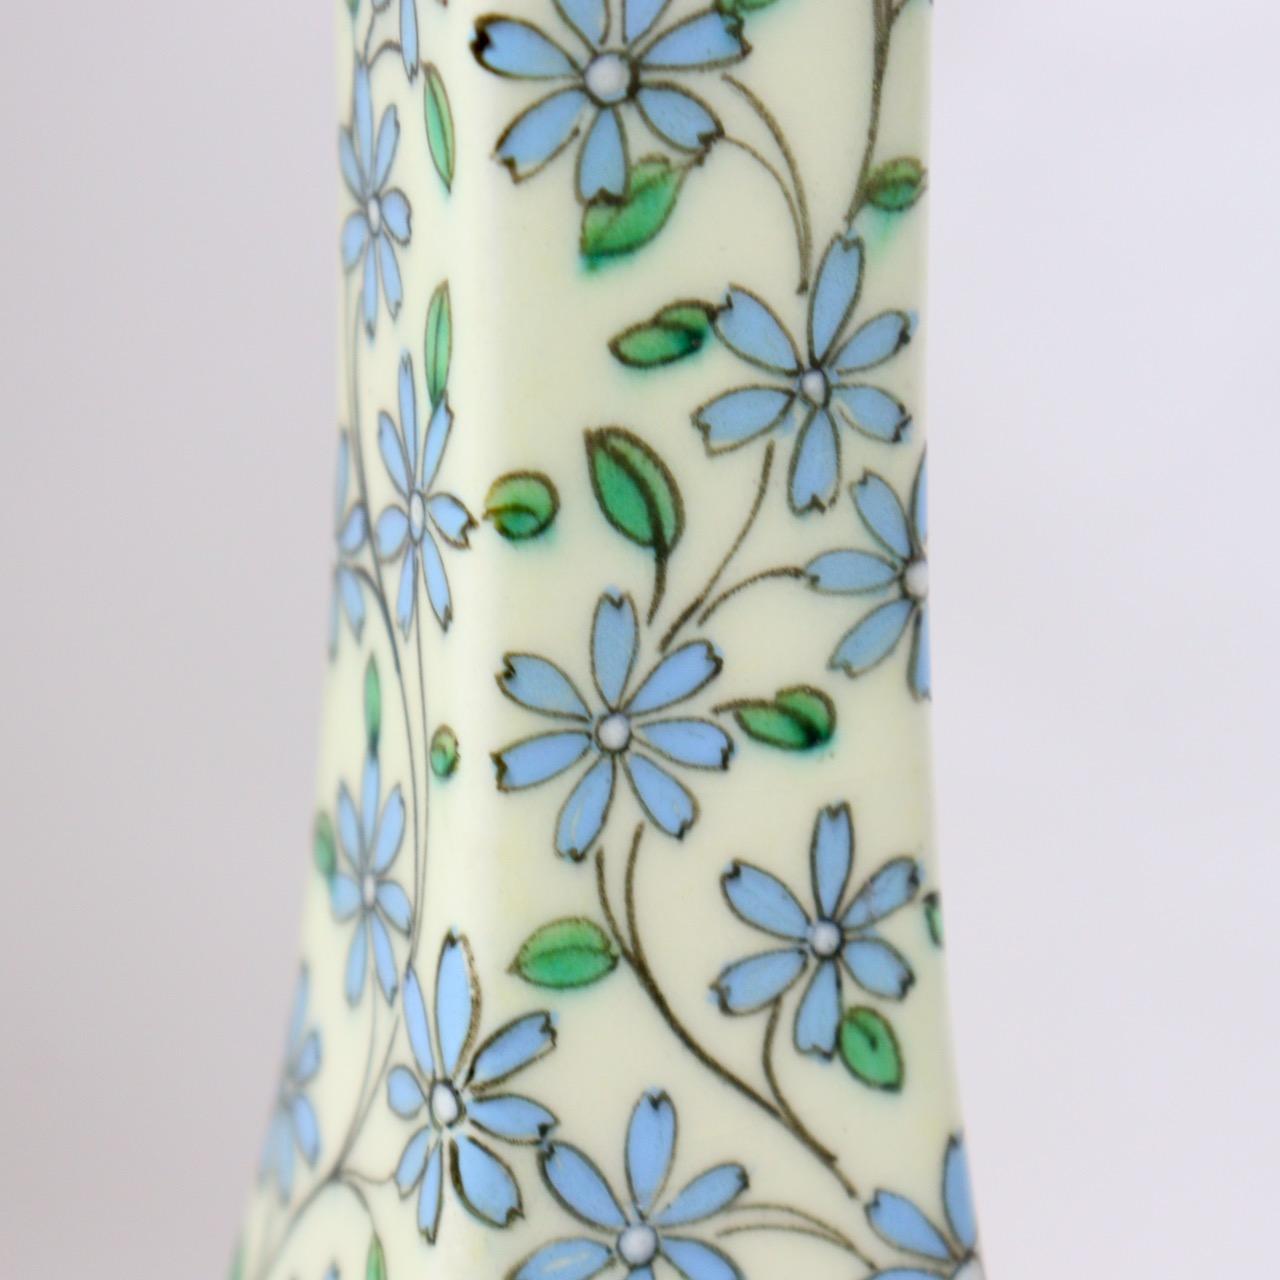 Late 19th Century A Théodore Deck (1823-1891) Enamelled Faience Soliflore Vase circa 1875